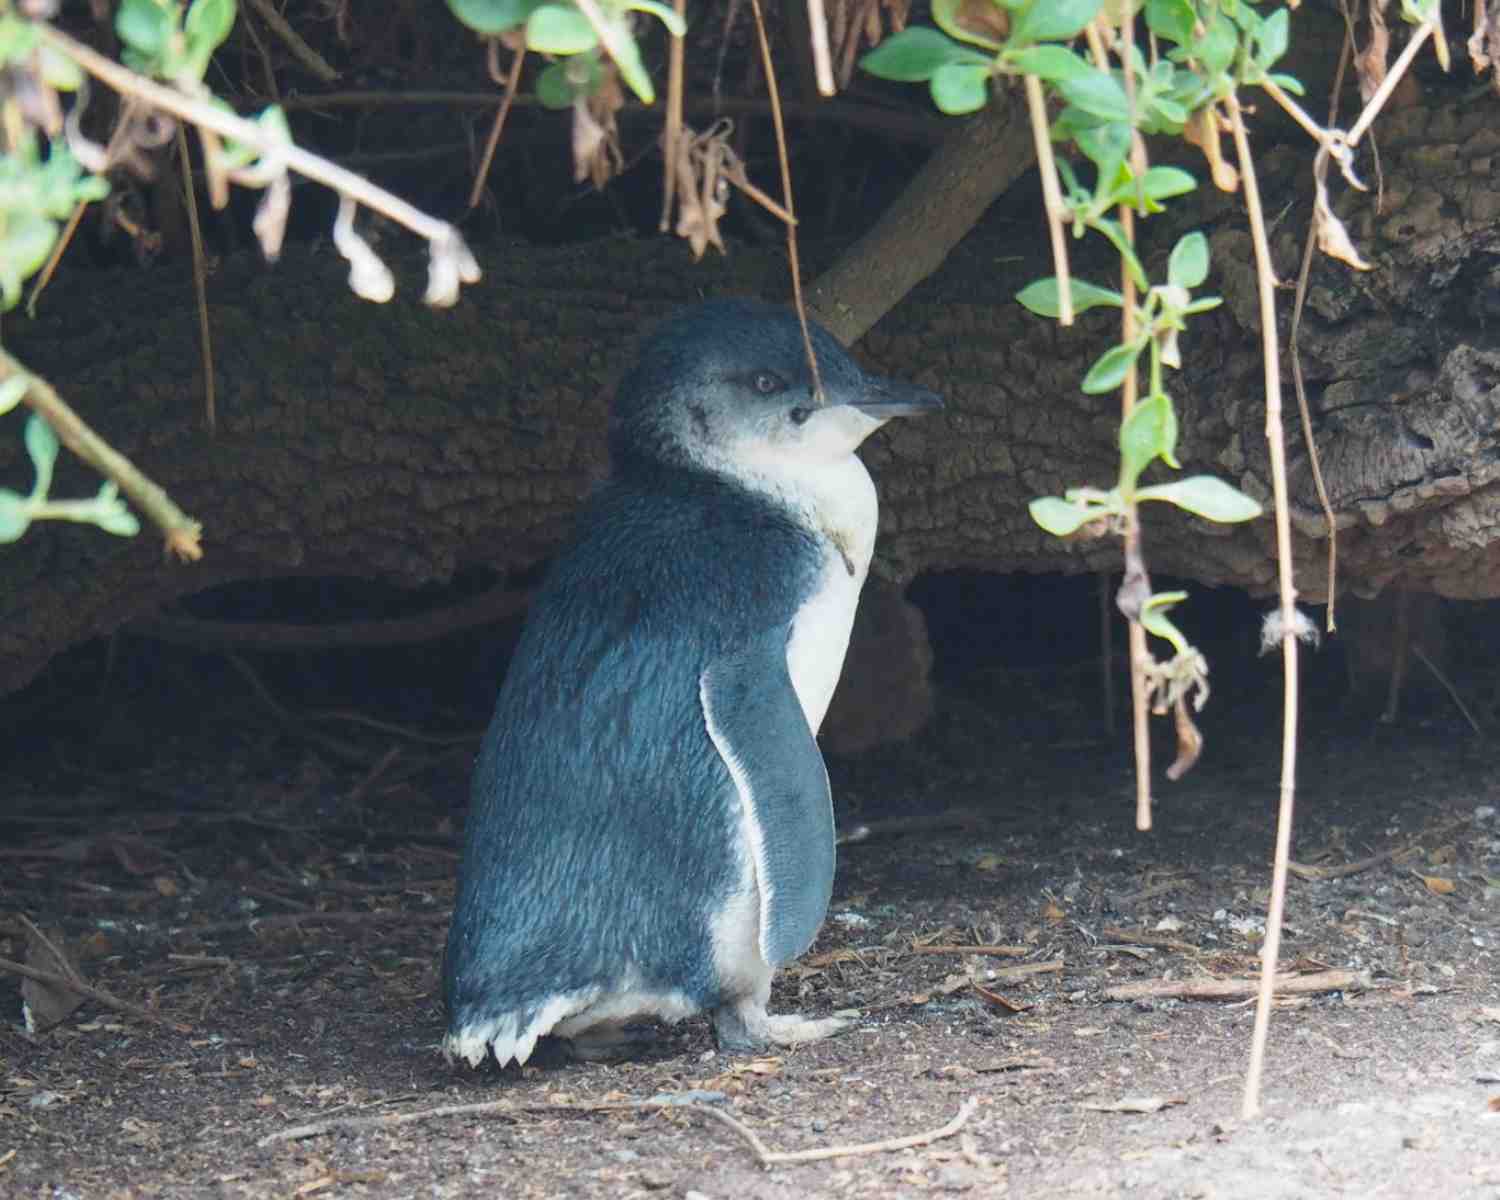 Where to find penguins in Tasmania Australia